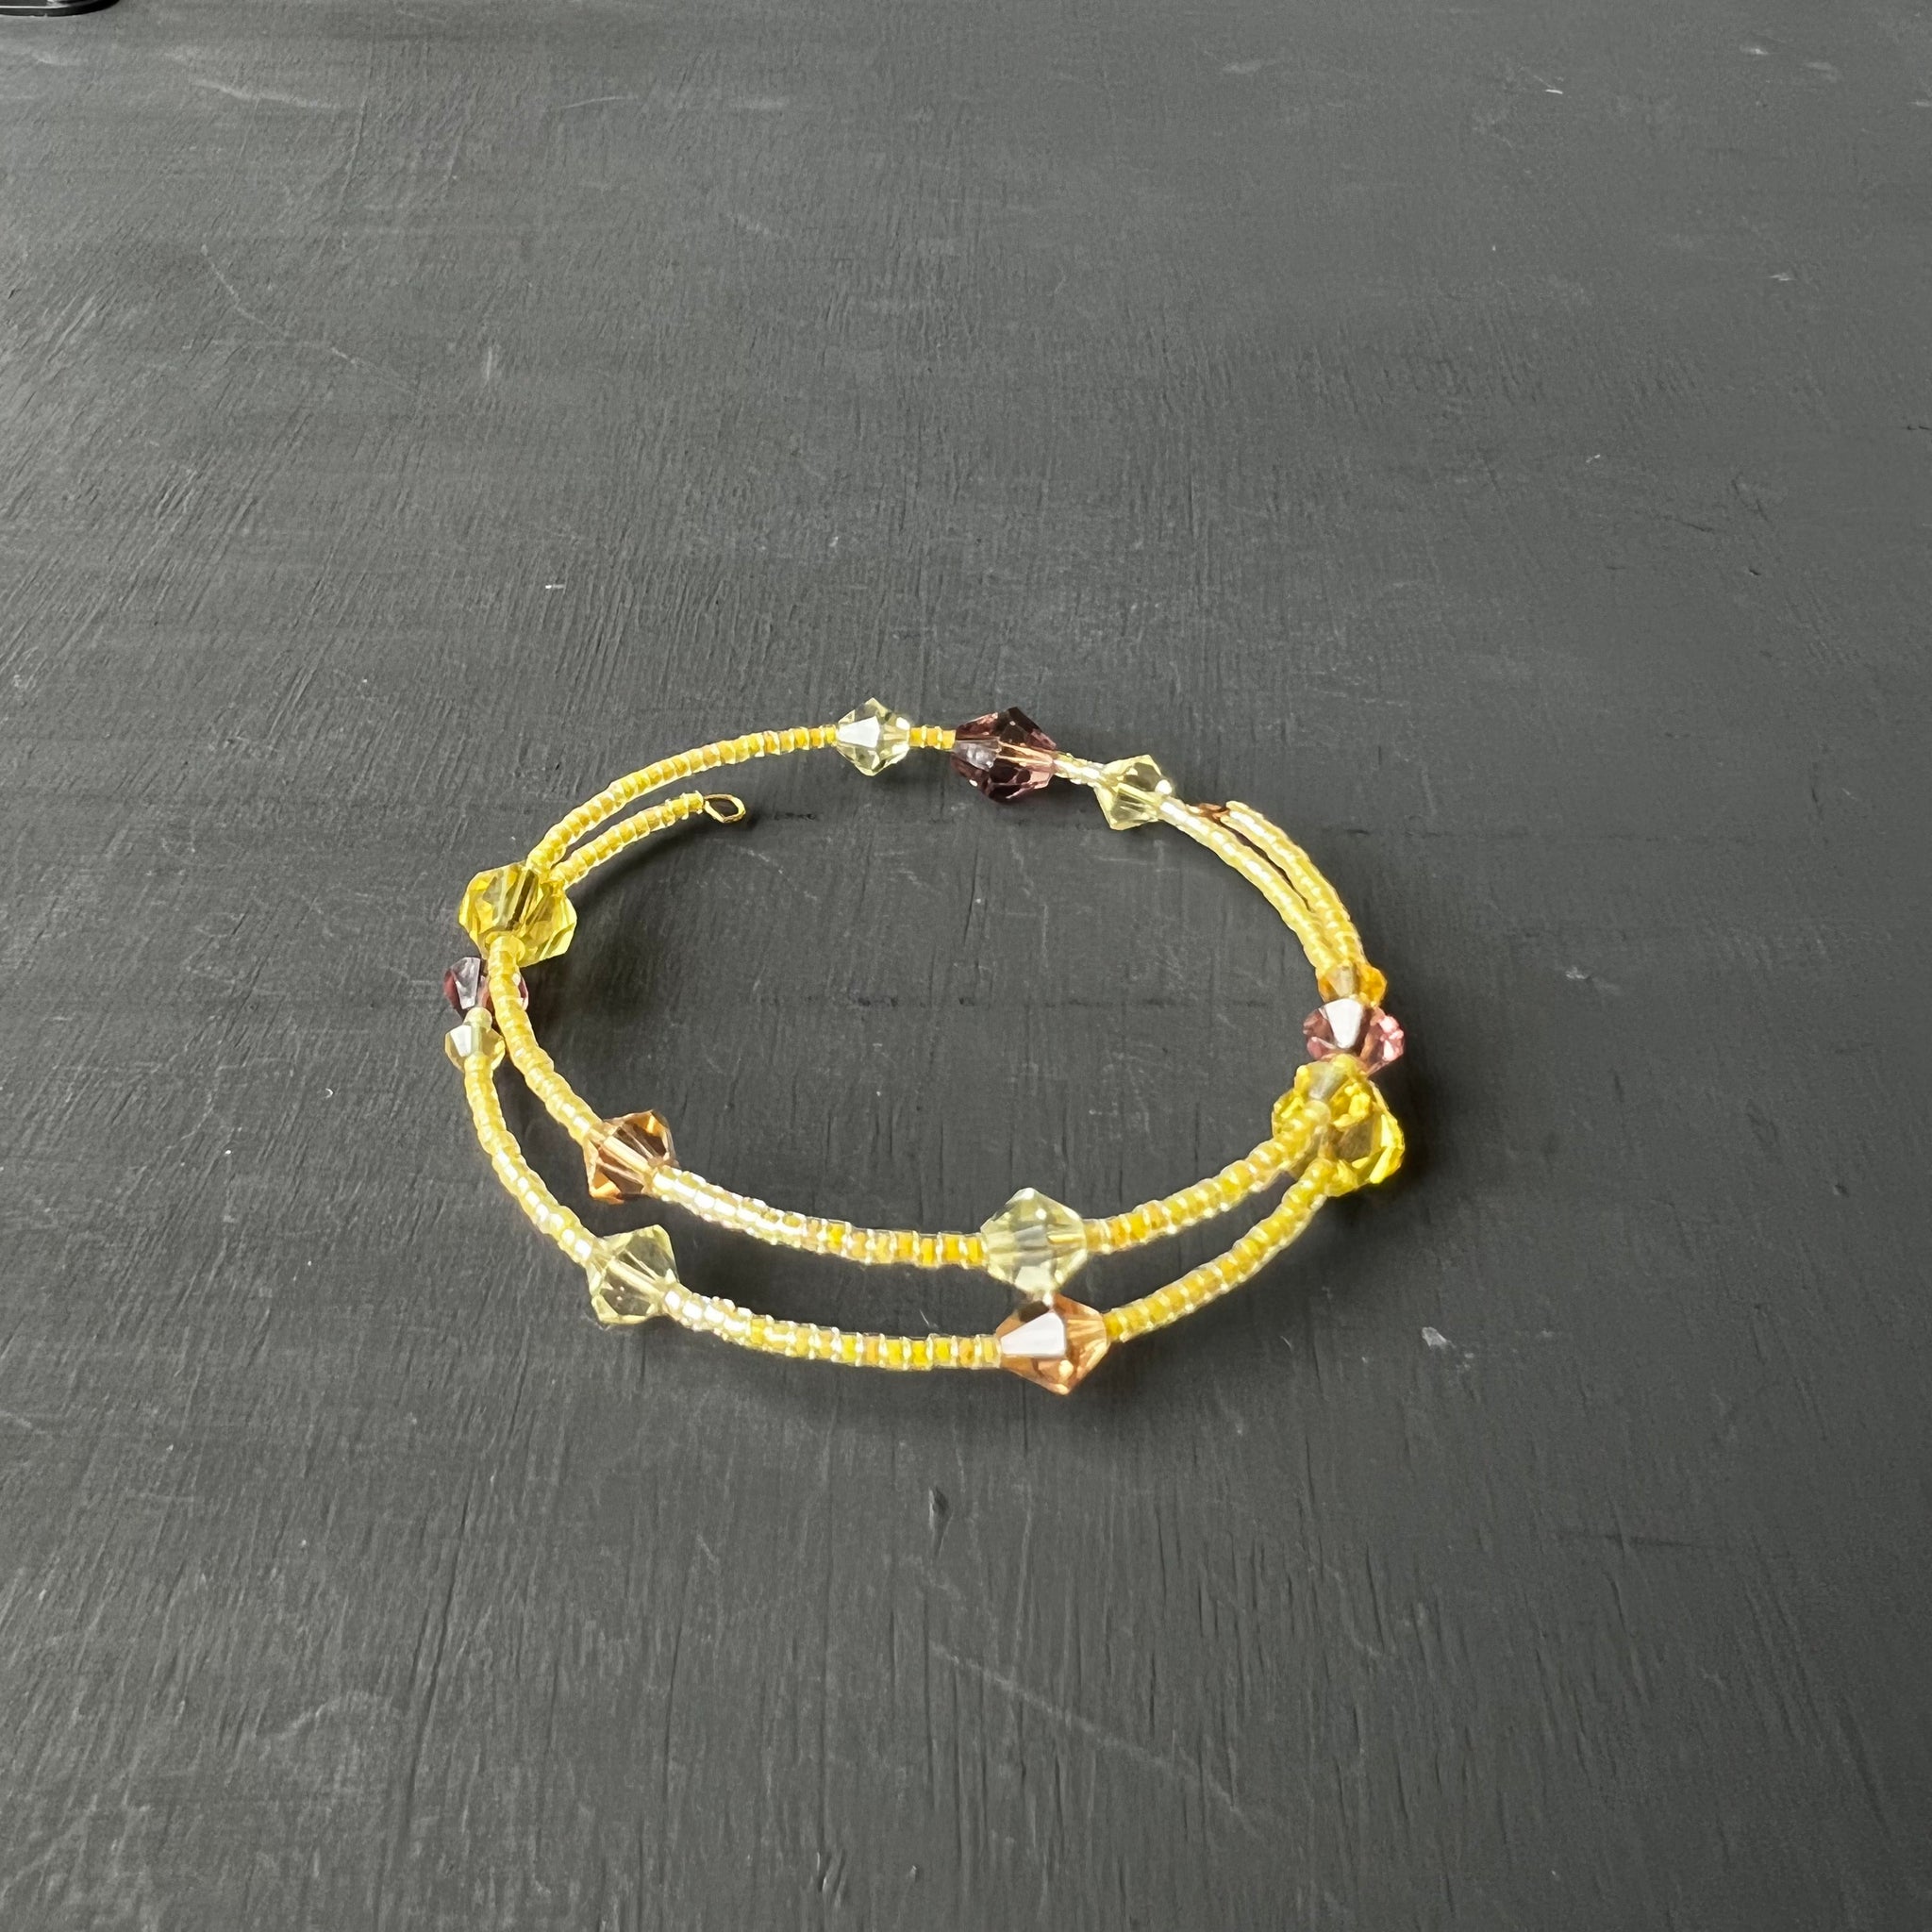 Golden & burgundy memory wire bracelet 2